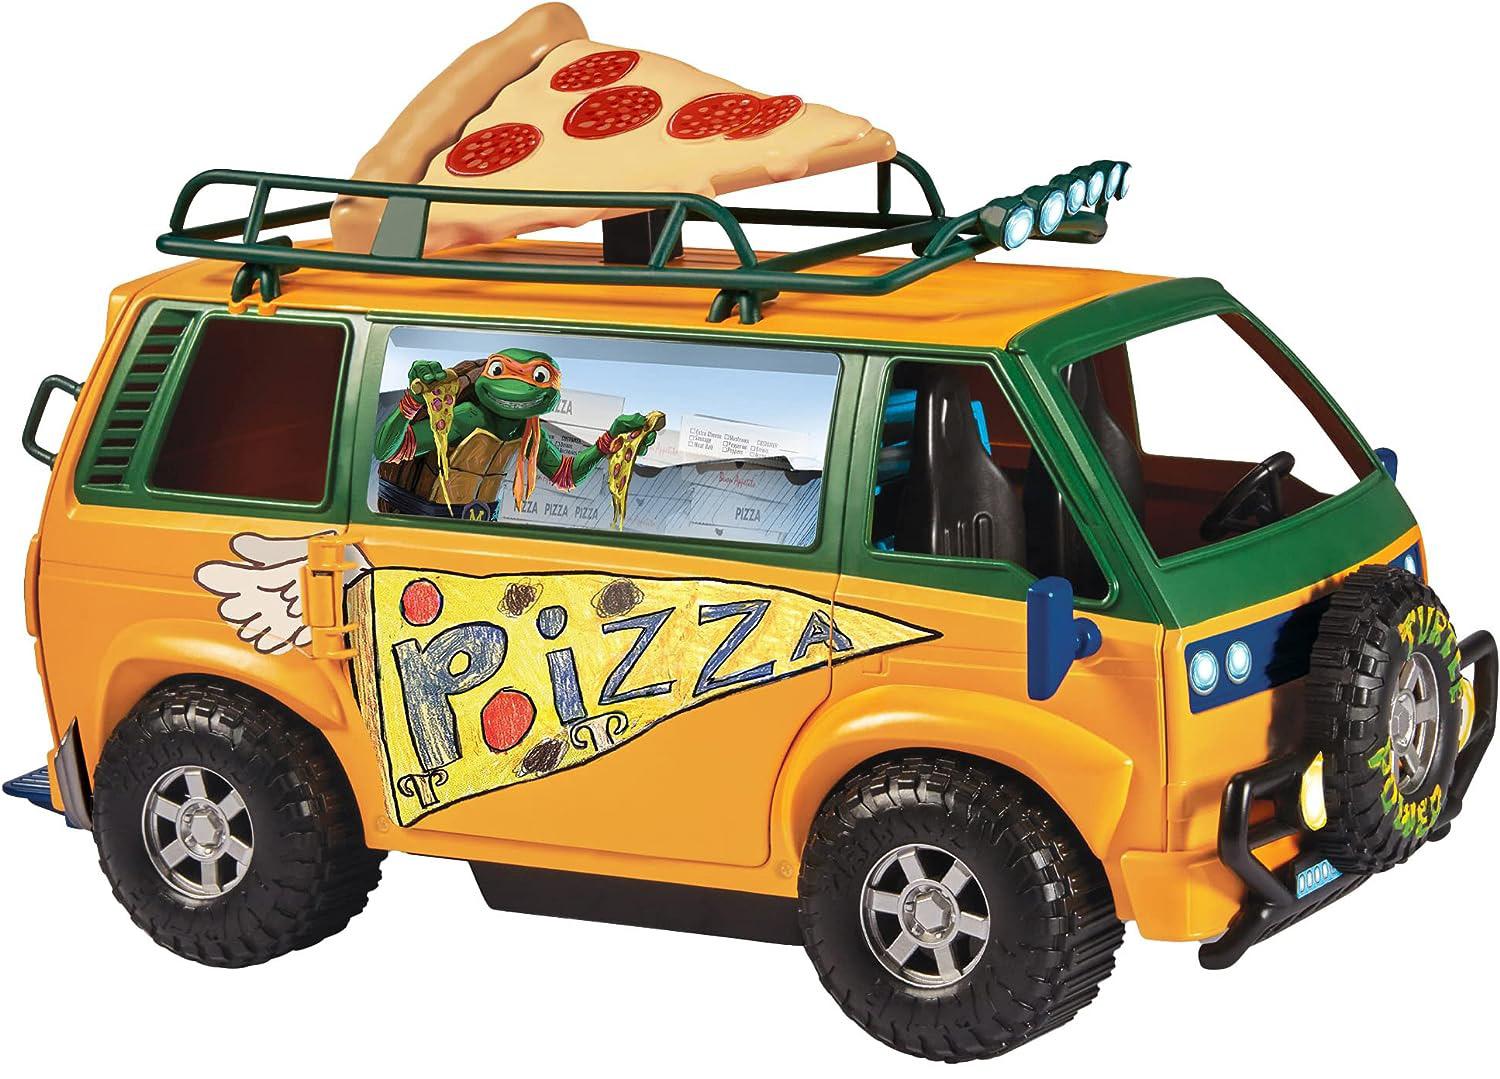 Teenage Mutant Ninja Turtles Mutant Mayhem Pizza Fire Delivery Van for $27.19 Shipped